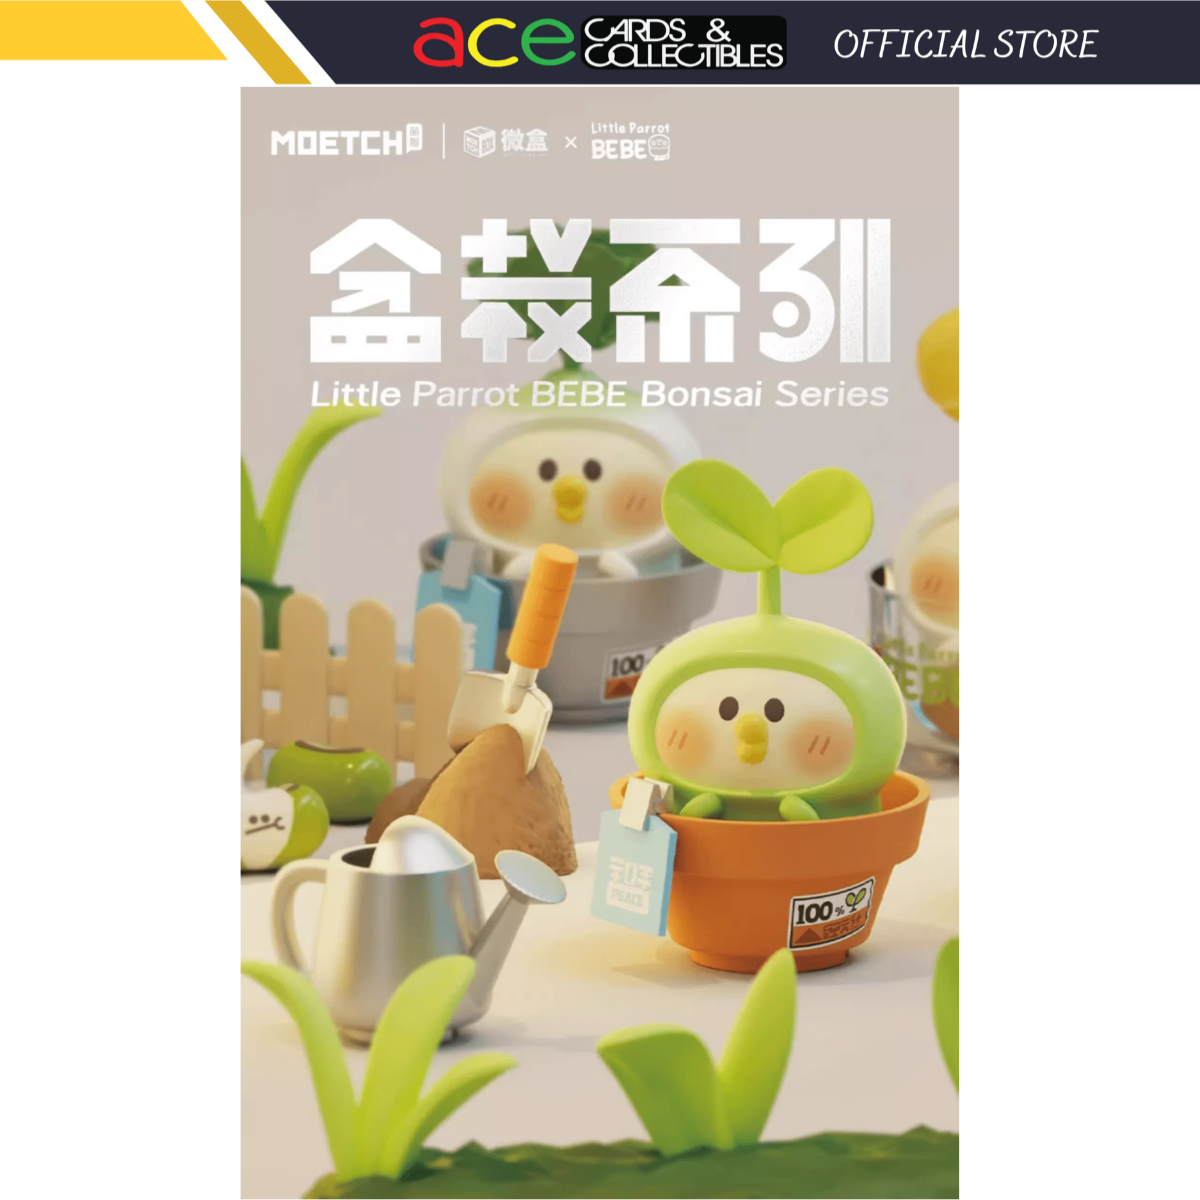 Moetch x Little Parot BEBE Bonsai Series-Single Box (Random)-Moetch-Ace Cards & Collectibles